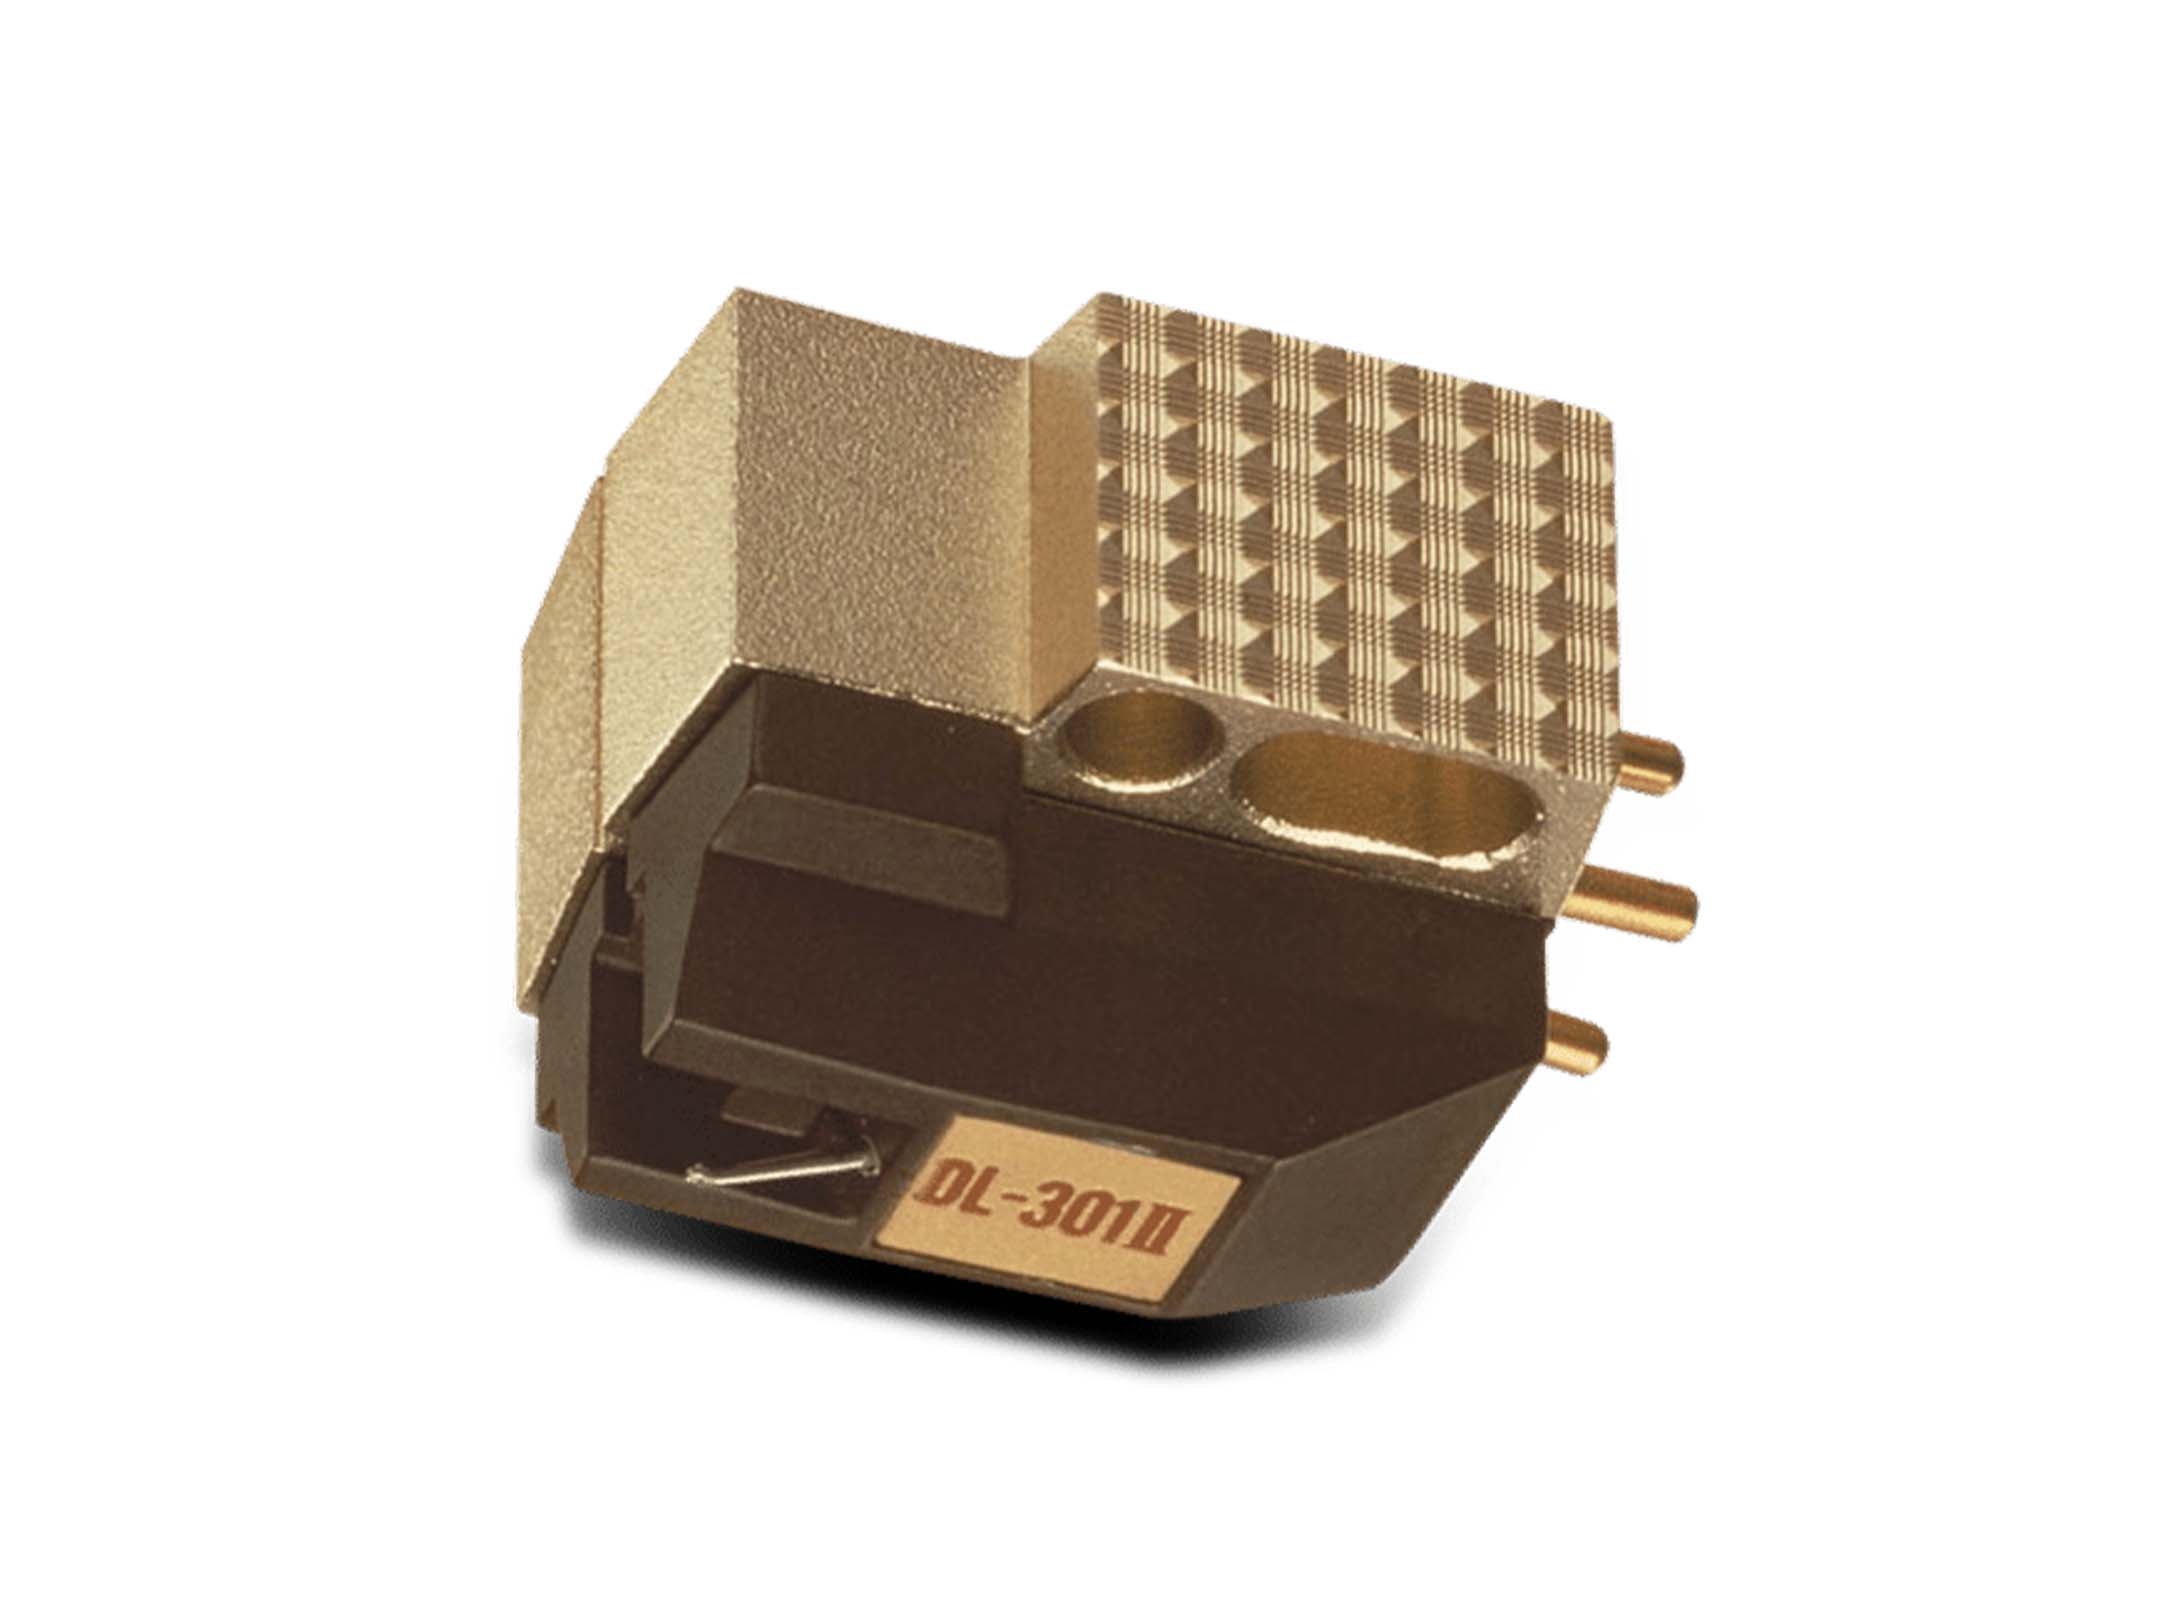 Denon DL-301/2 Moving Coil Phono Cartridge - Gold